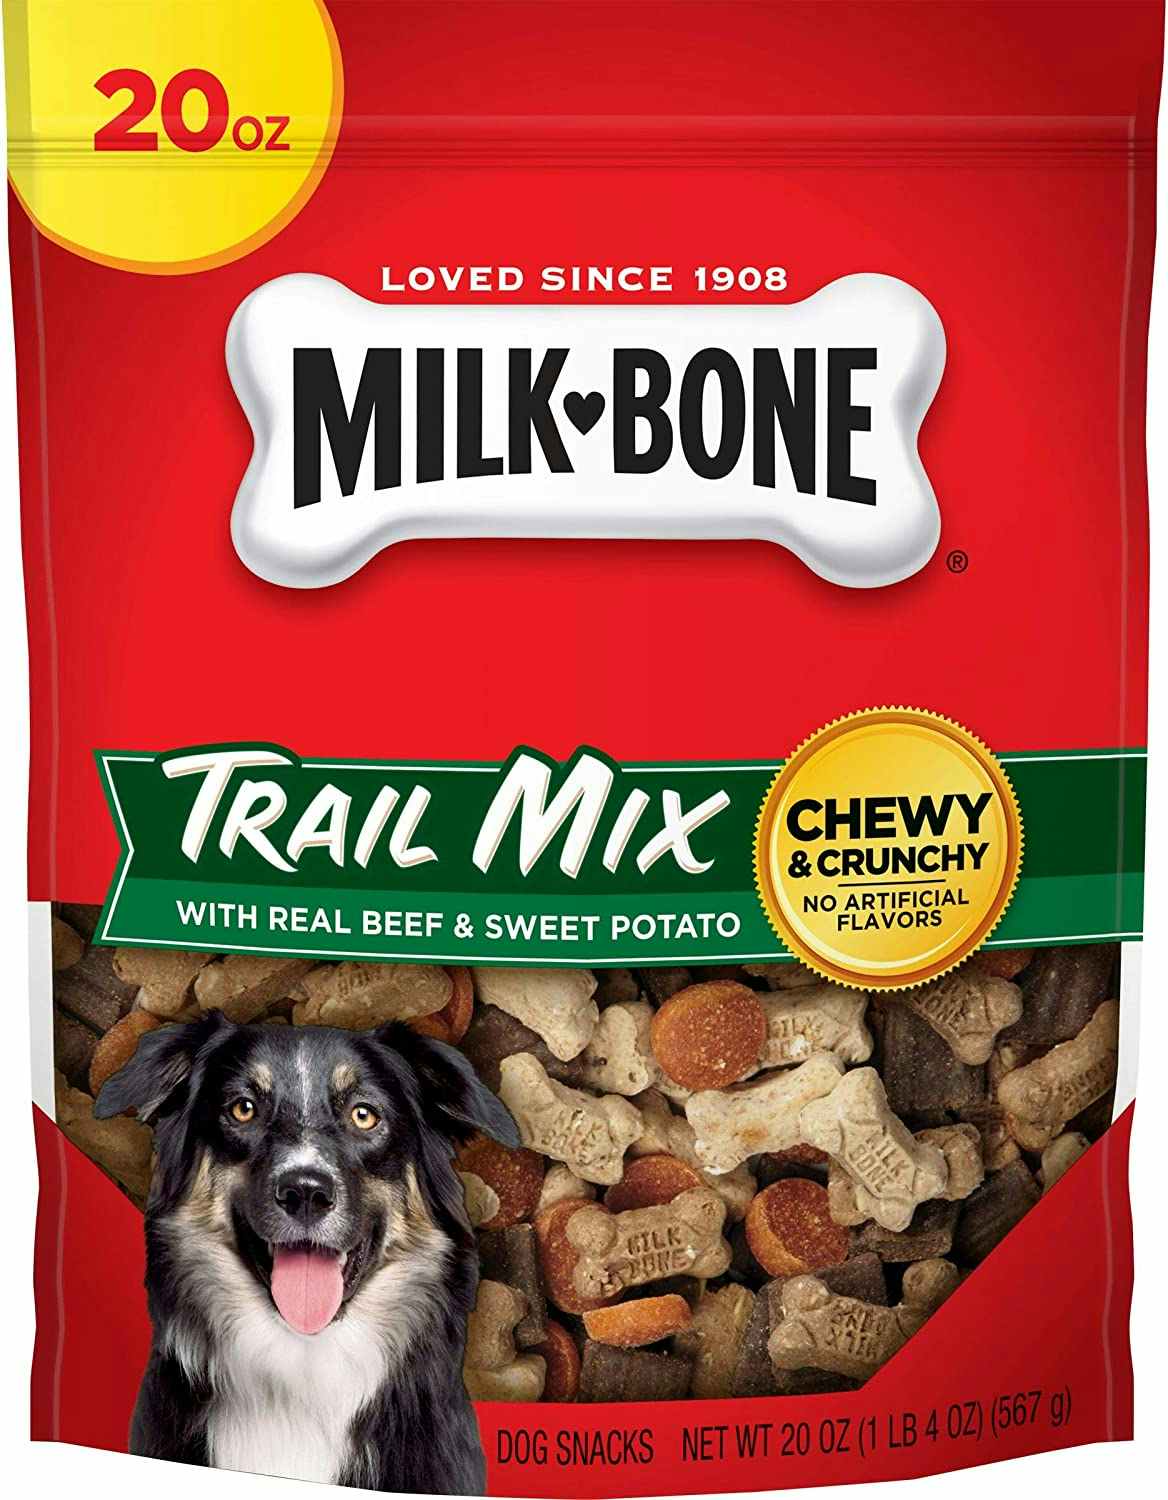 A bag of Milk-Bone trail mix.